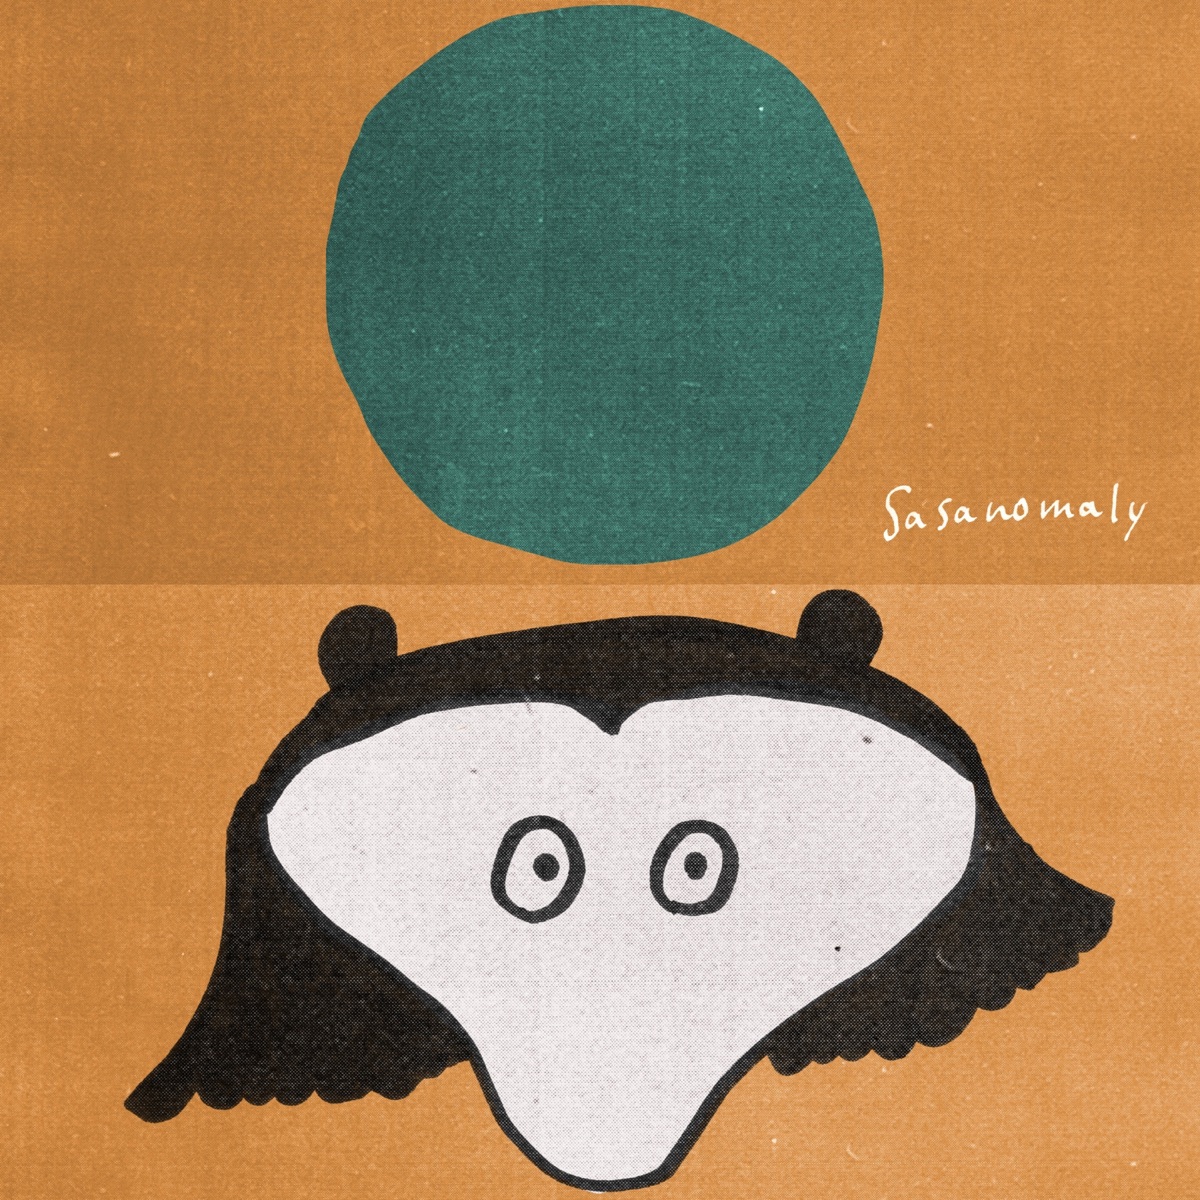 Cover art for『Sasanomaly - きっと変わらない色』from the release『kitto kawaranai iro